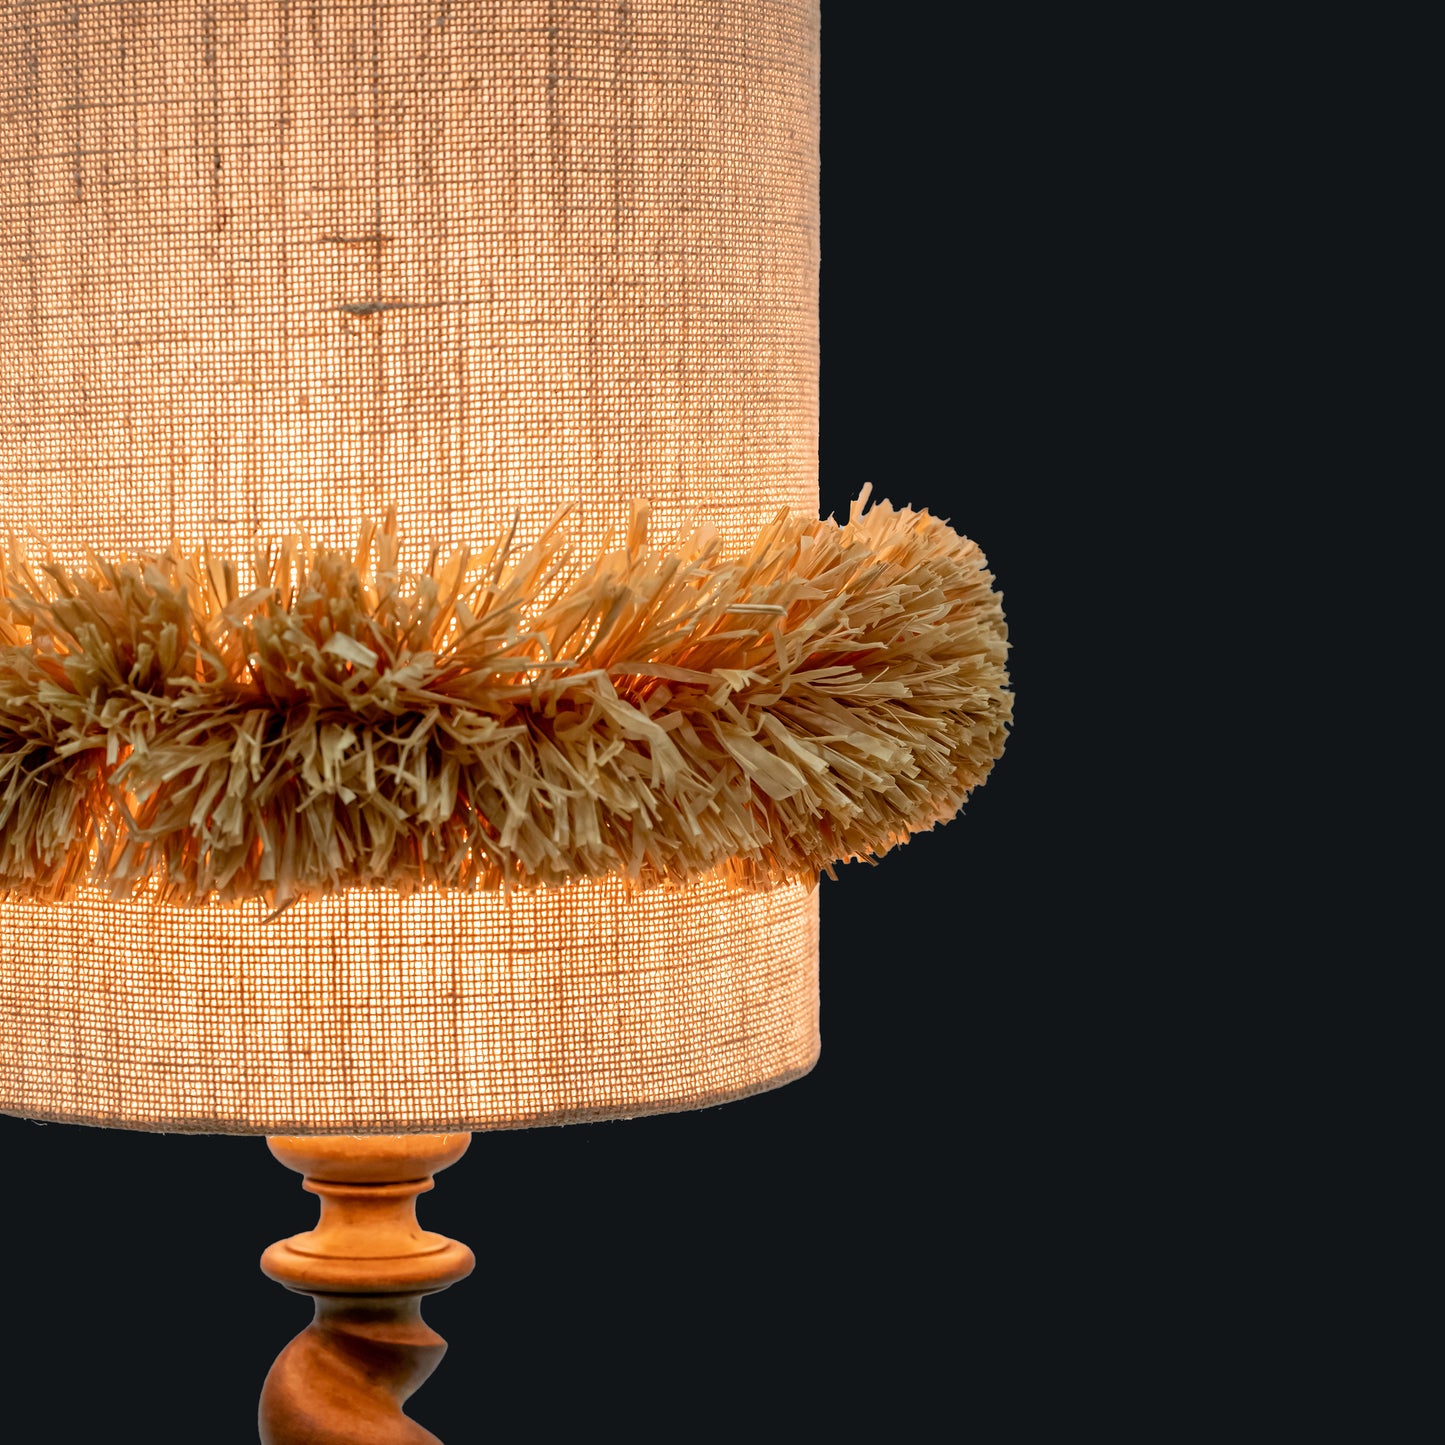 Larinho - jute lamp shade with natural raffia